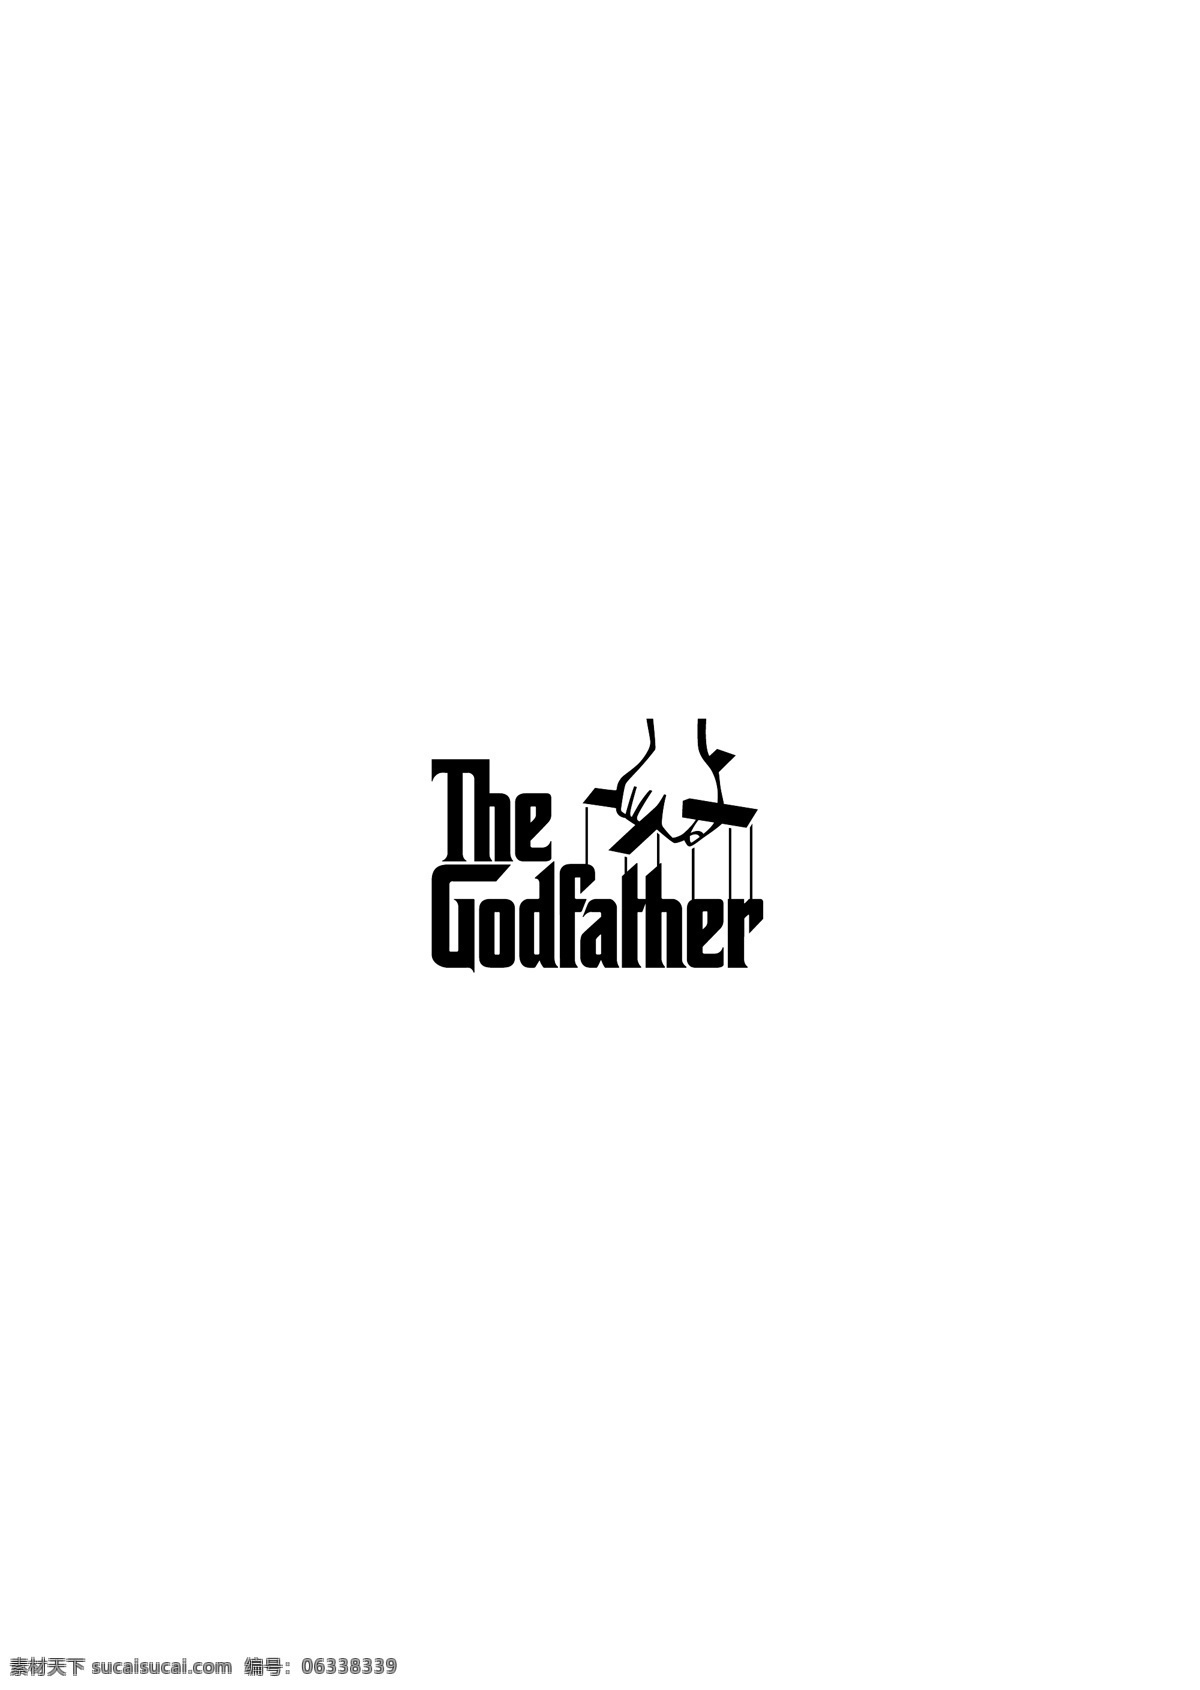 logo大全 logo 设计欣赏 商业矢量 矢量下载 thegodfather1 好莱坞 电影 标志 标志设计 欣赏 网页矢量 矢量图 其他矢量图